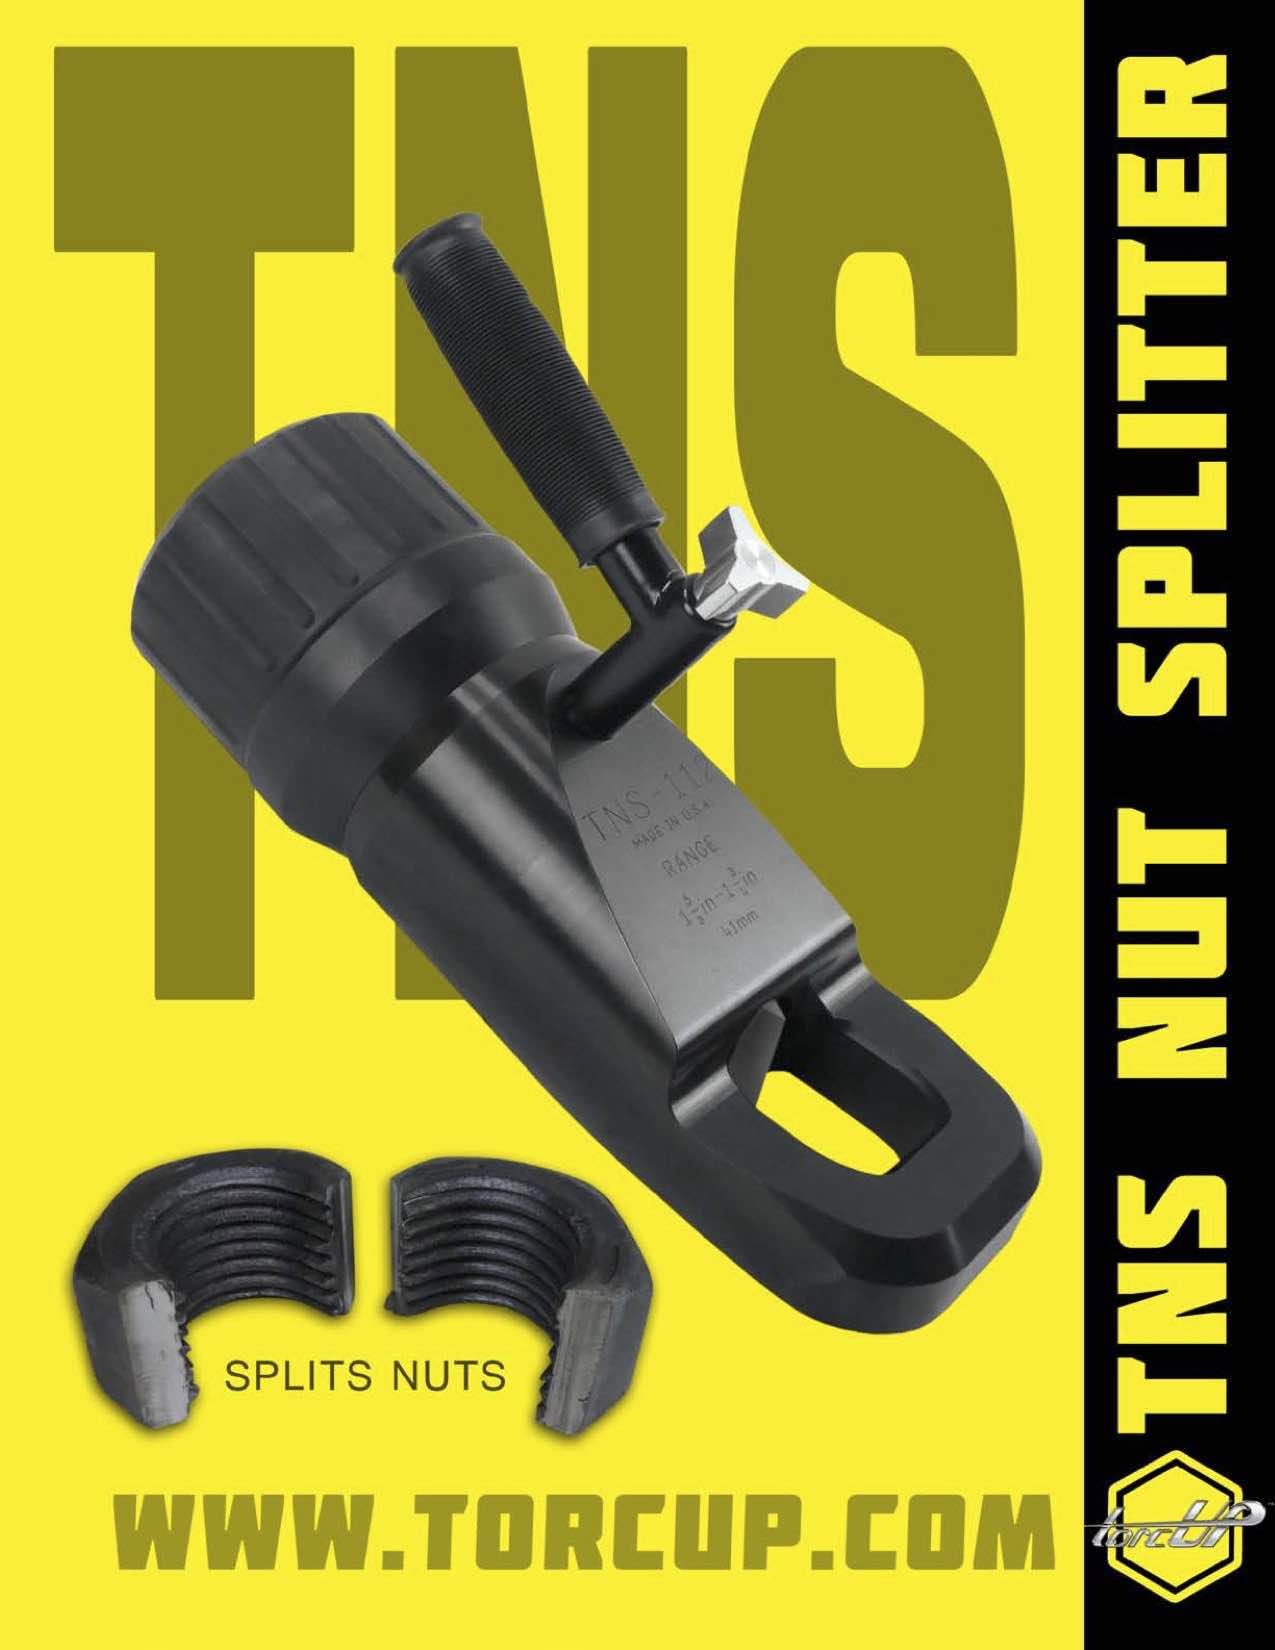 2015 TNS Nut Splitter TorcUP